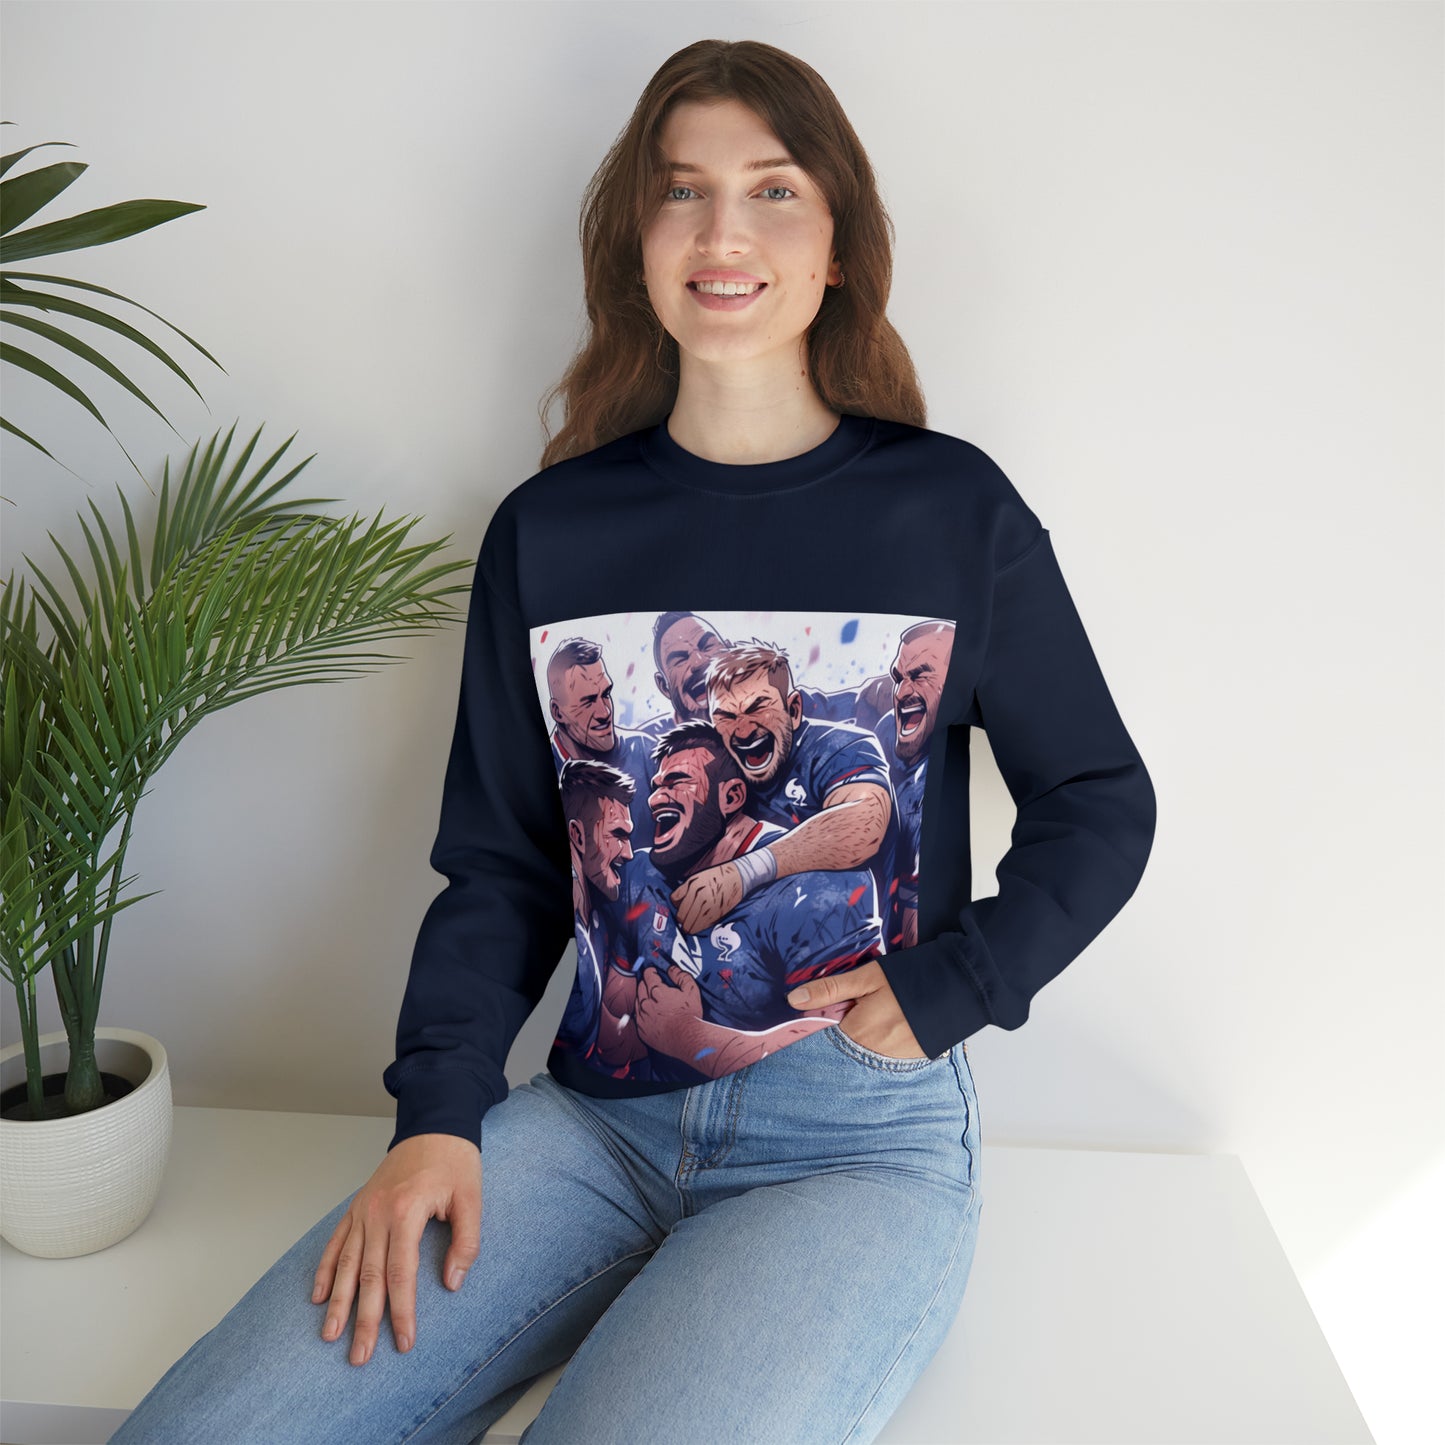 Post Match France - dark sweatshirts